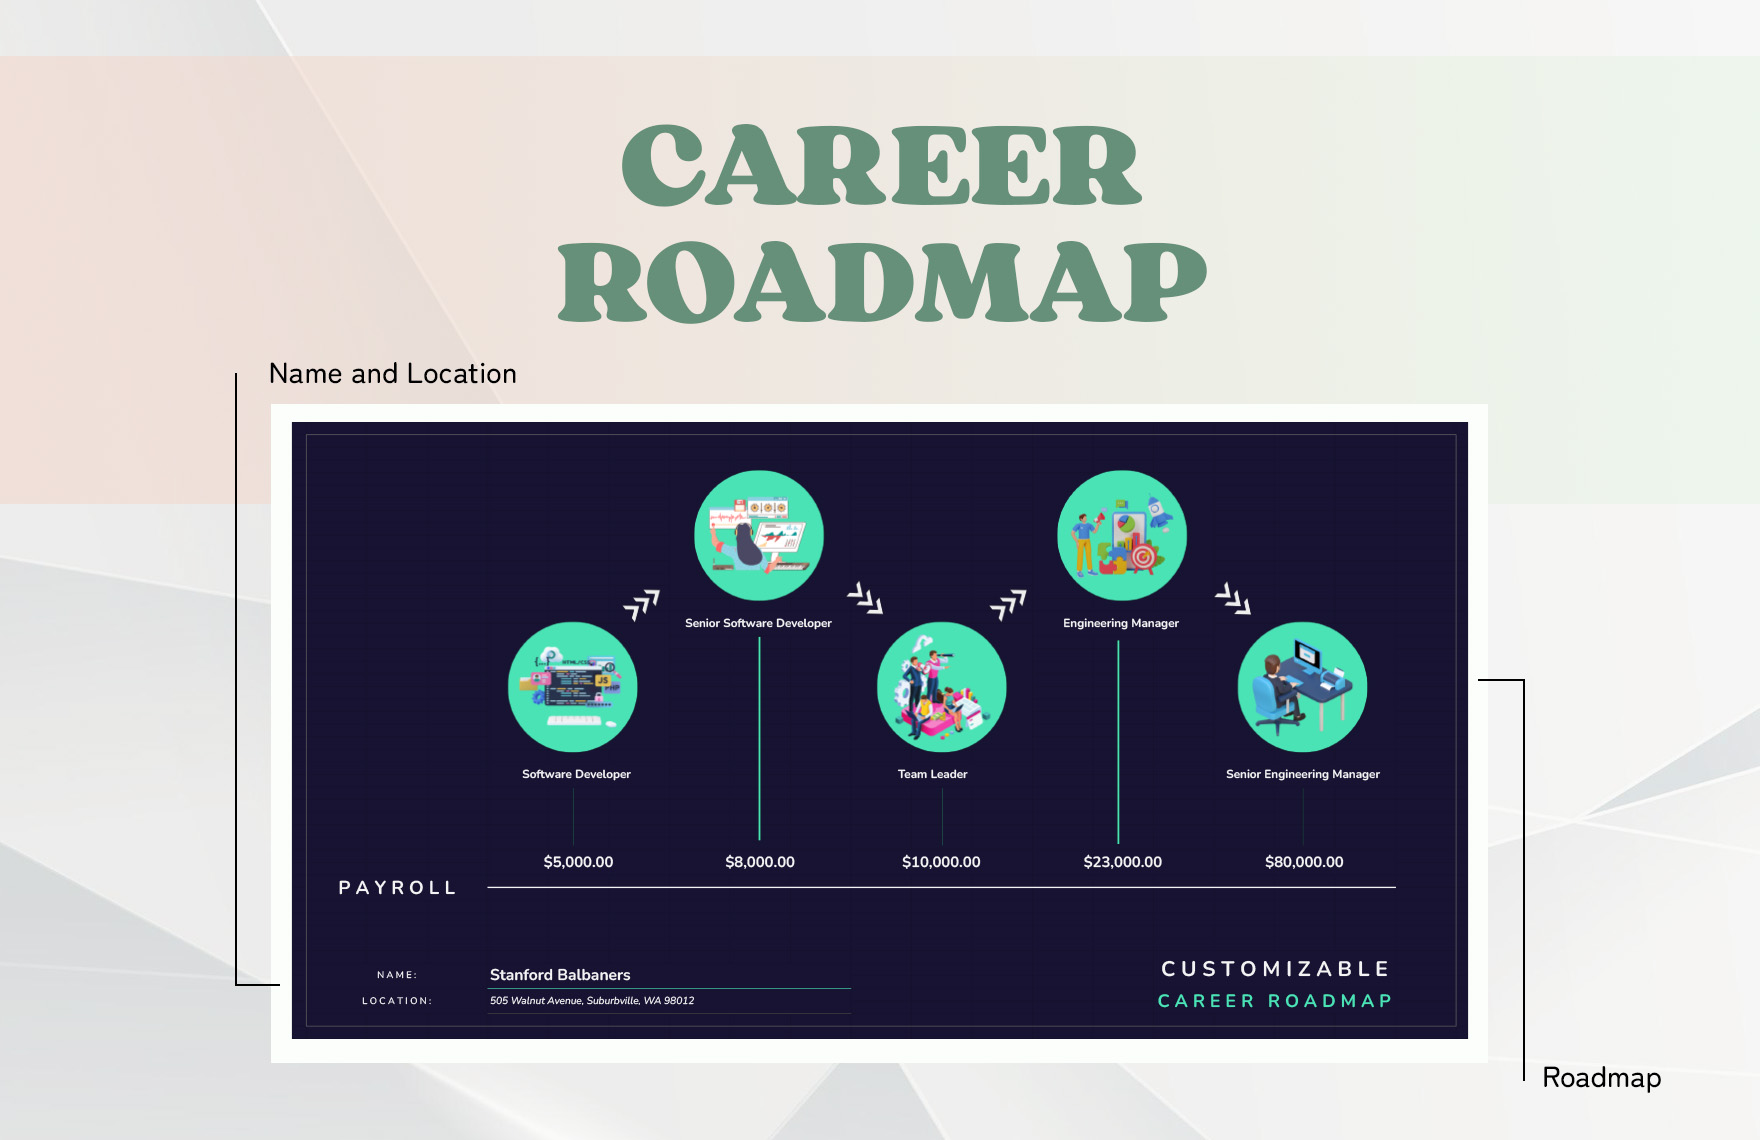 Customizable Career Roadmap Template